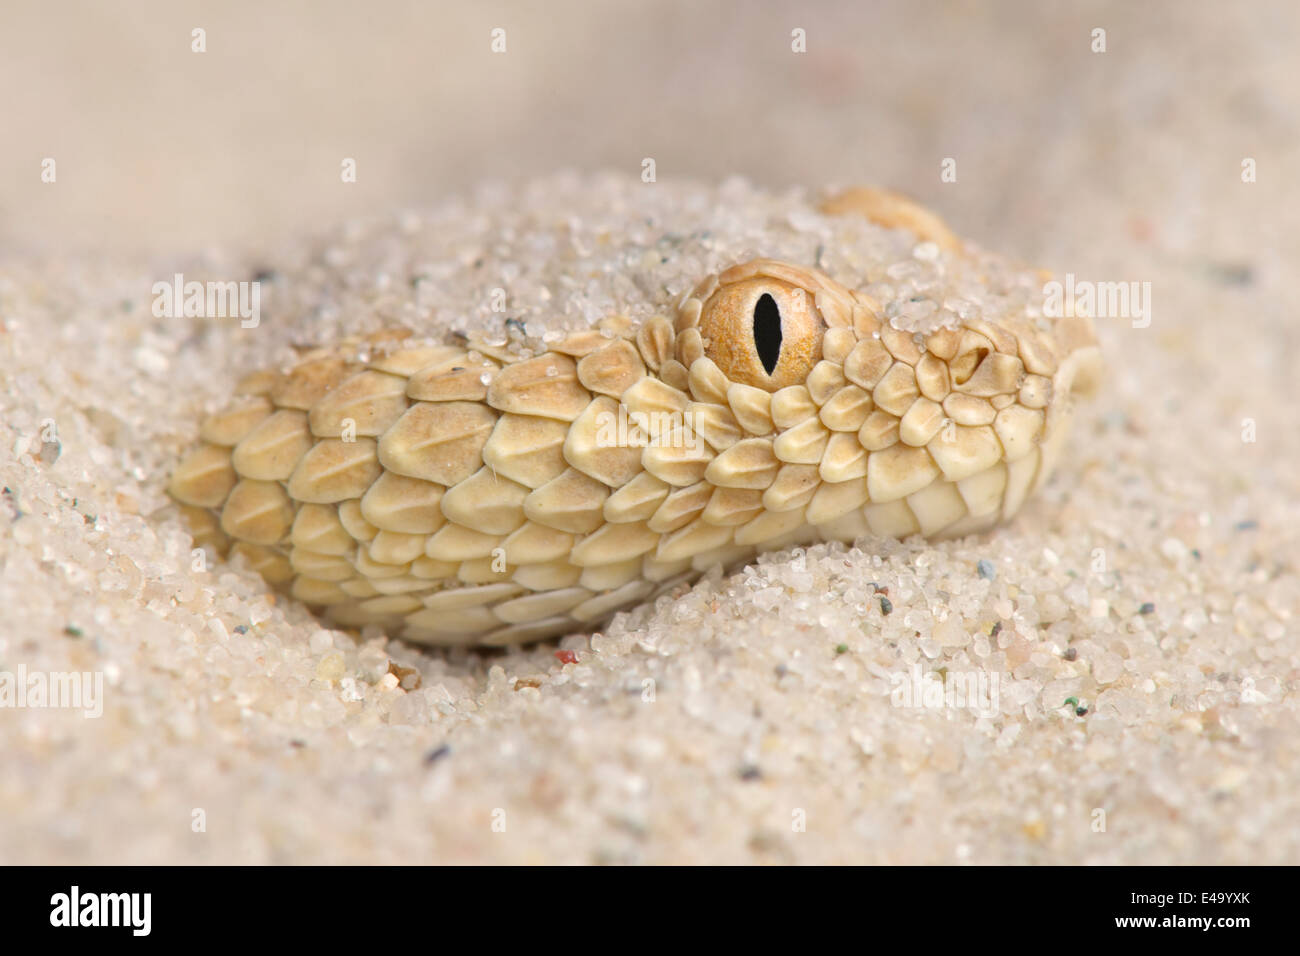 Sahara sand viper / Cerastes vipera Stock Photo